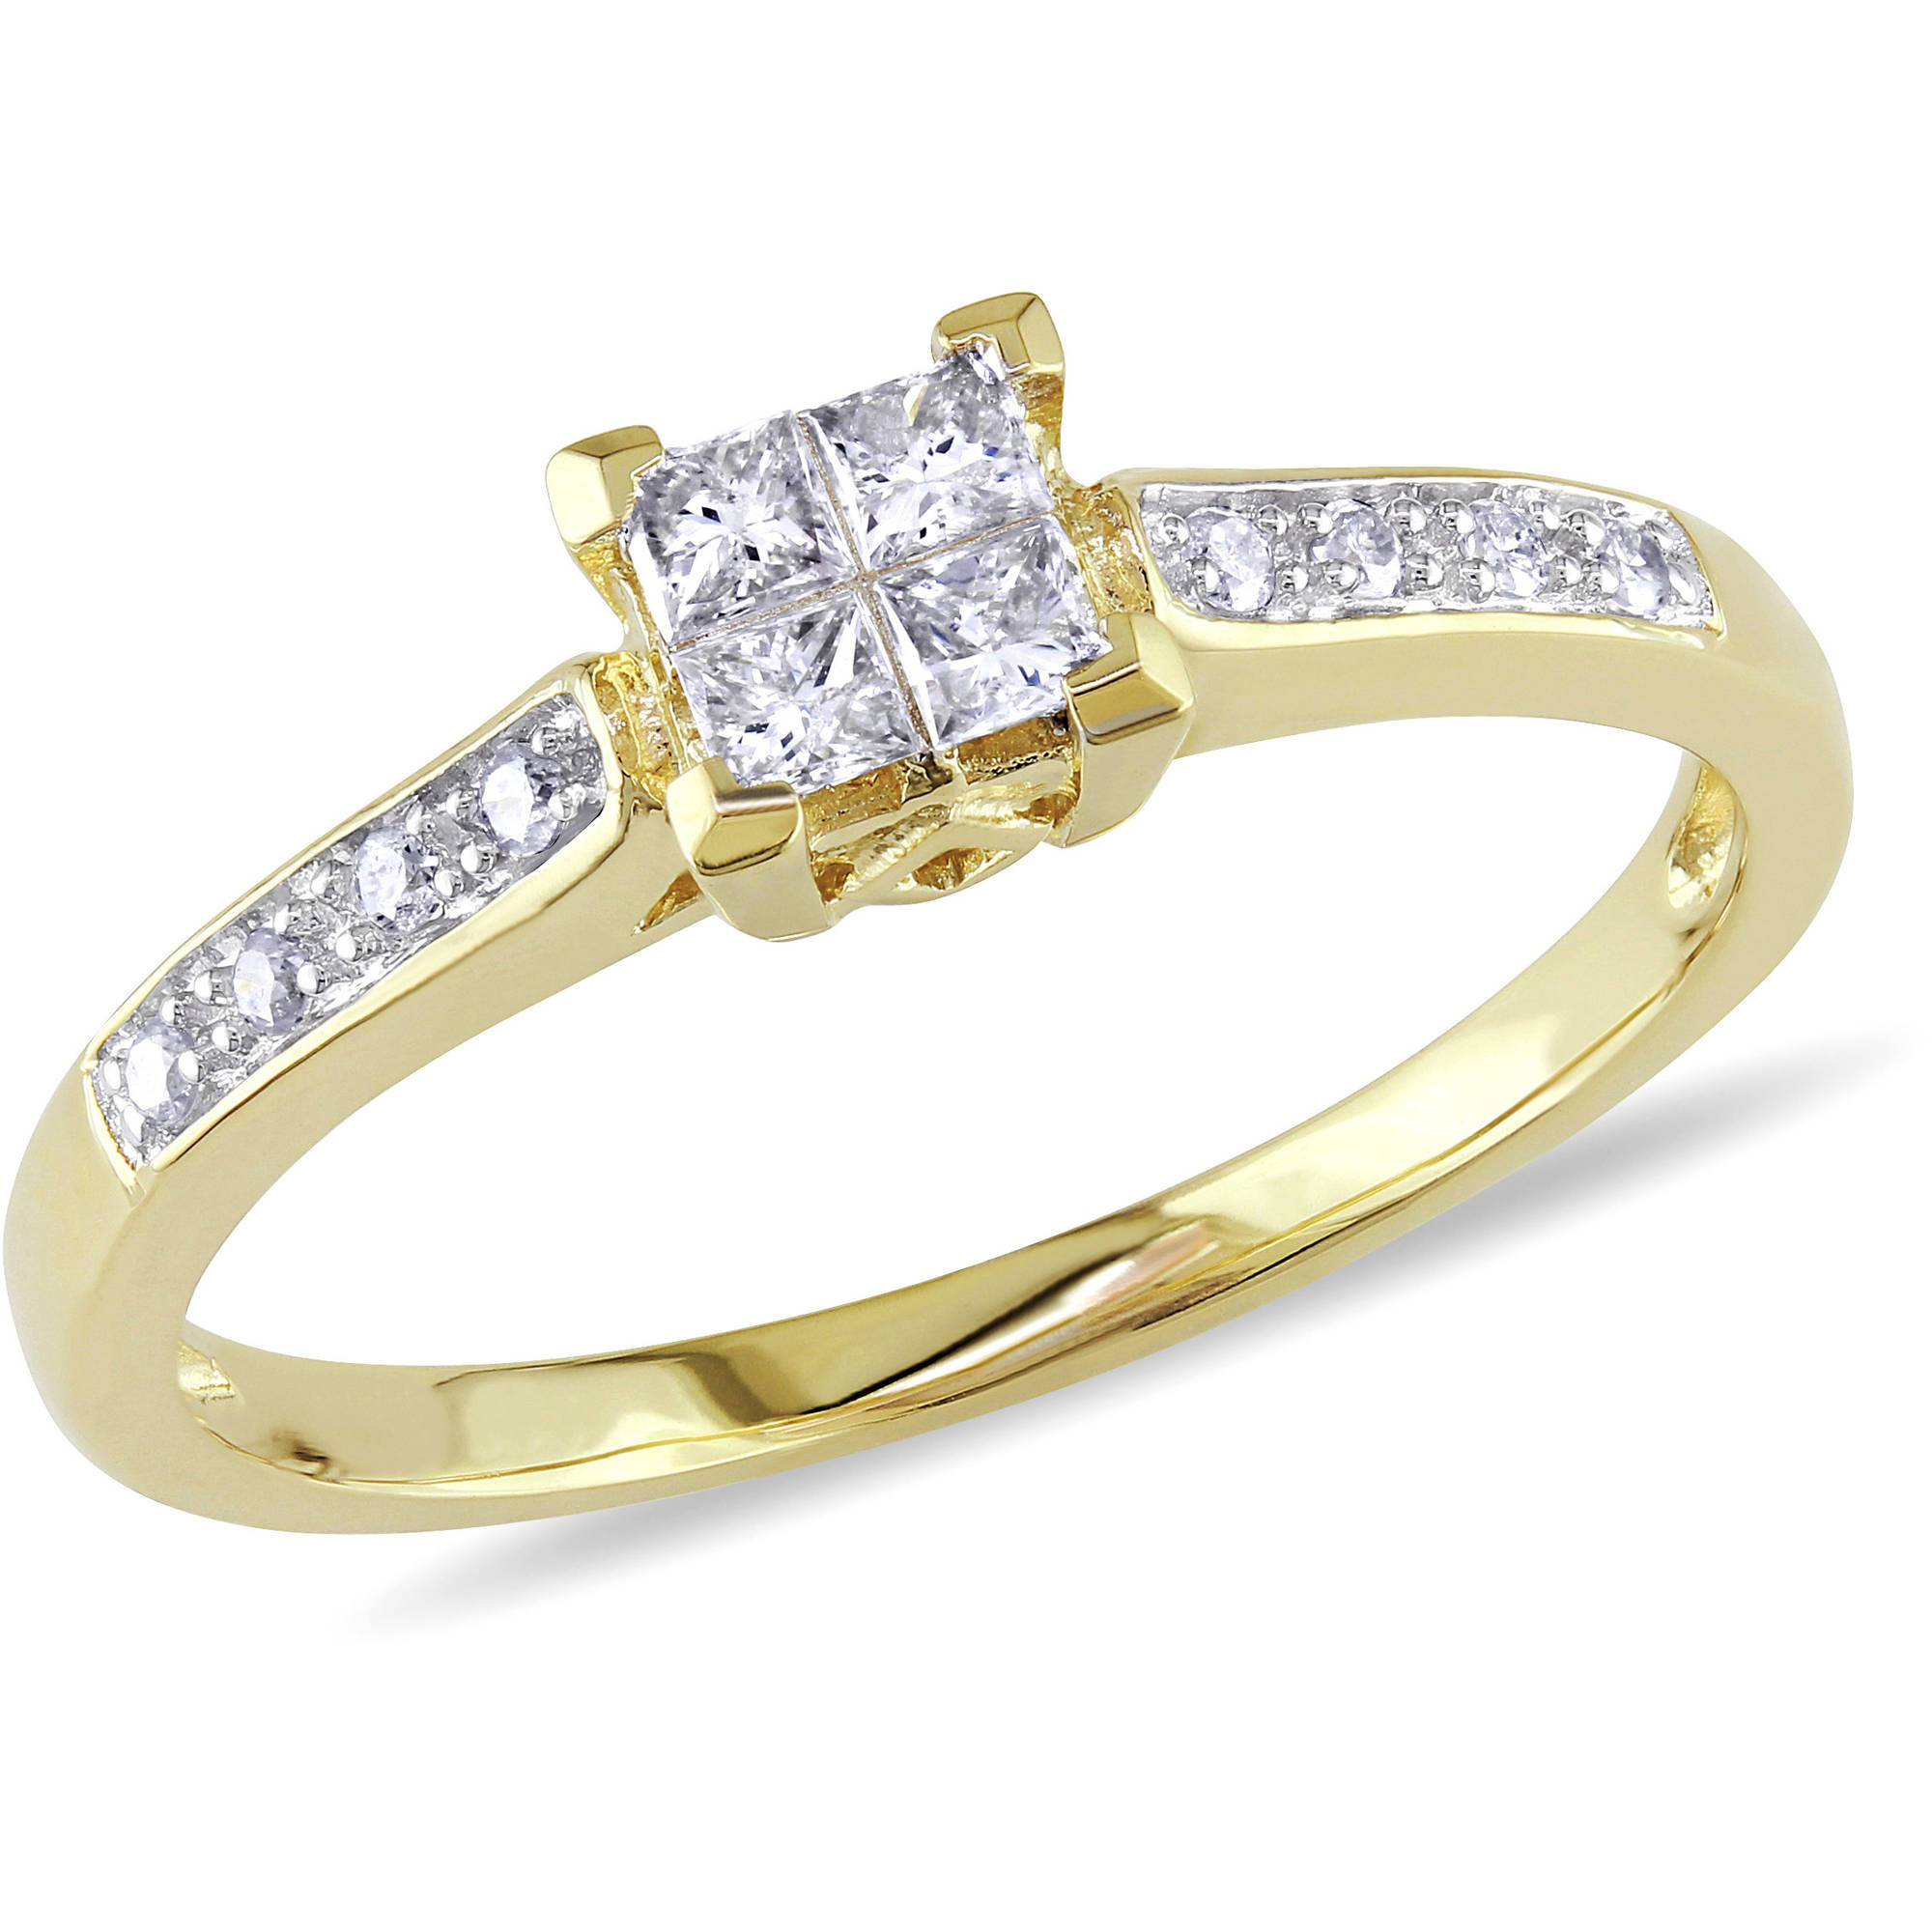 Walmart Diamond Wedding Rings
 Miabella 1 4 Carat T W Princess Cut Diamond 10kt Yellow